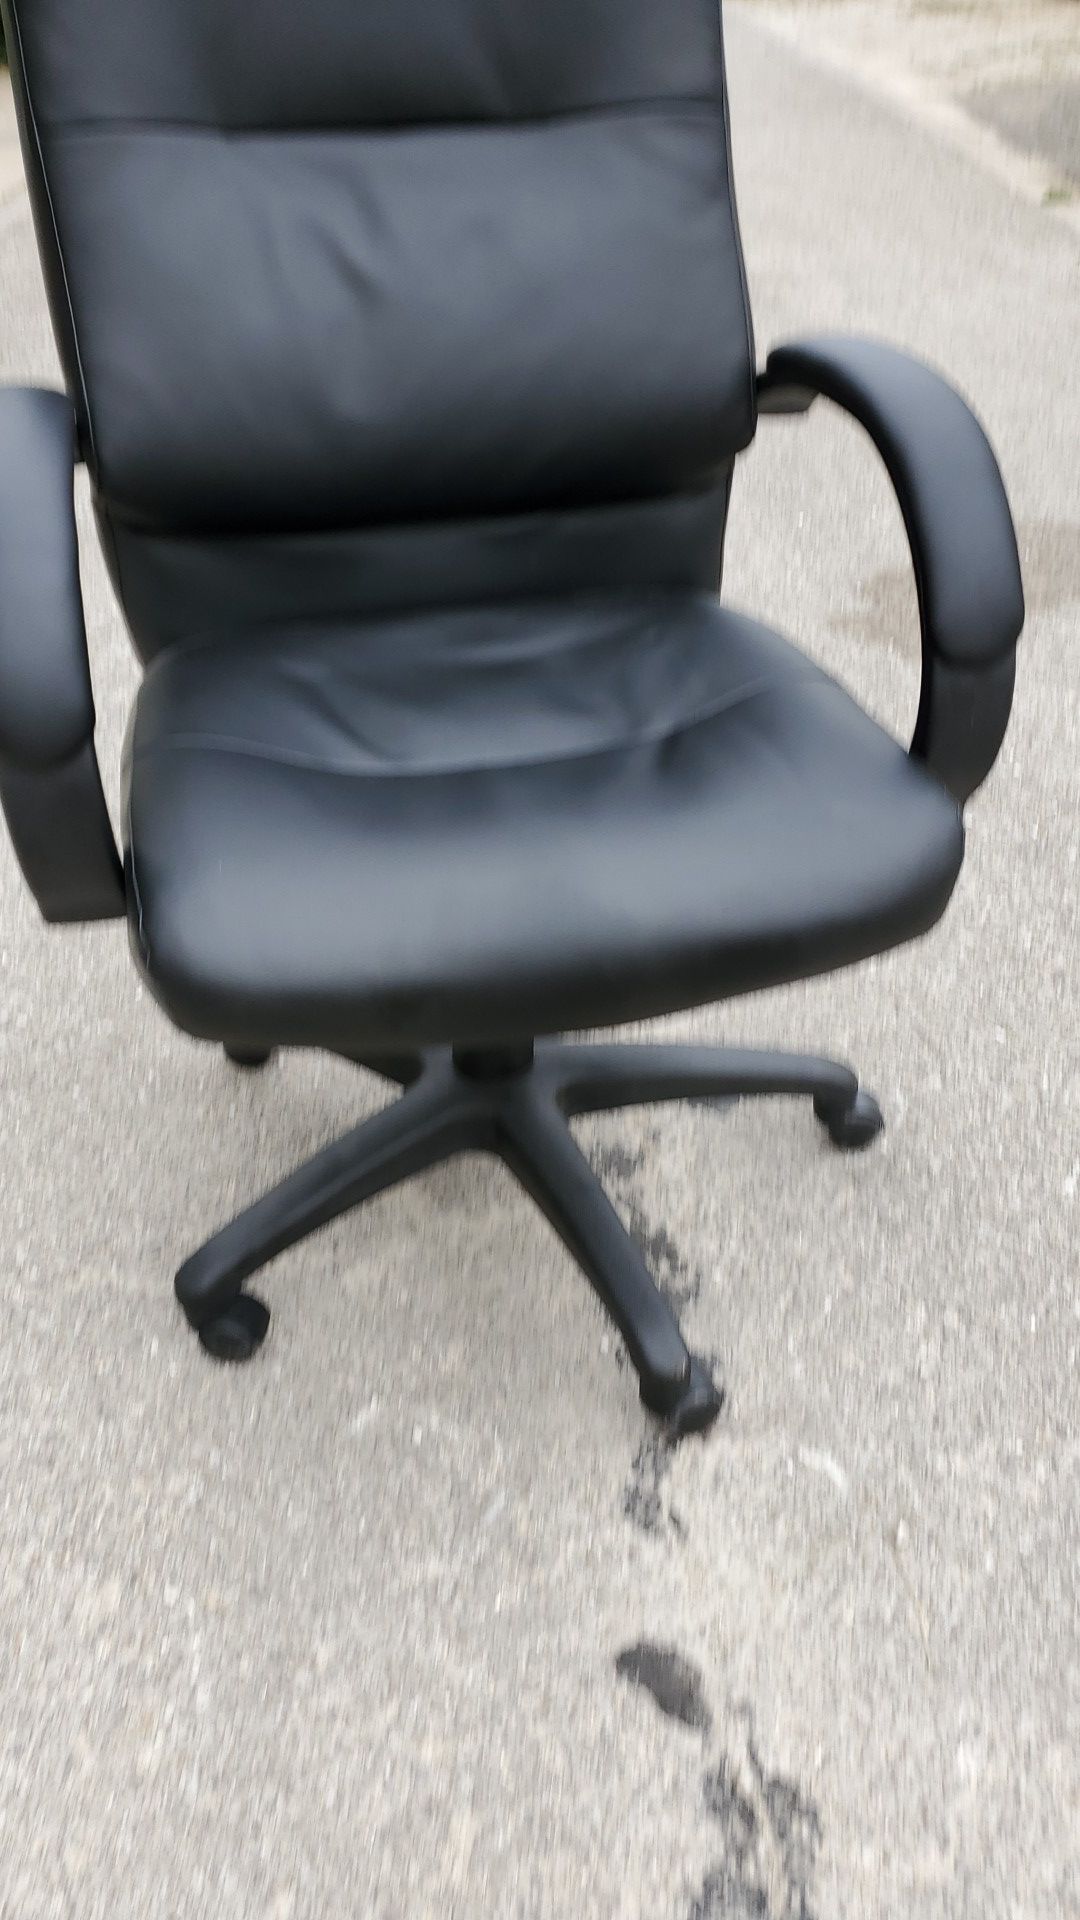 Premium office chair